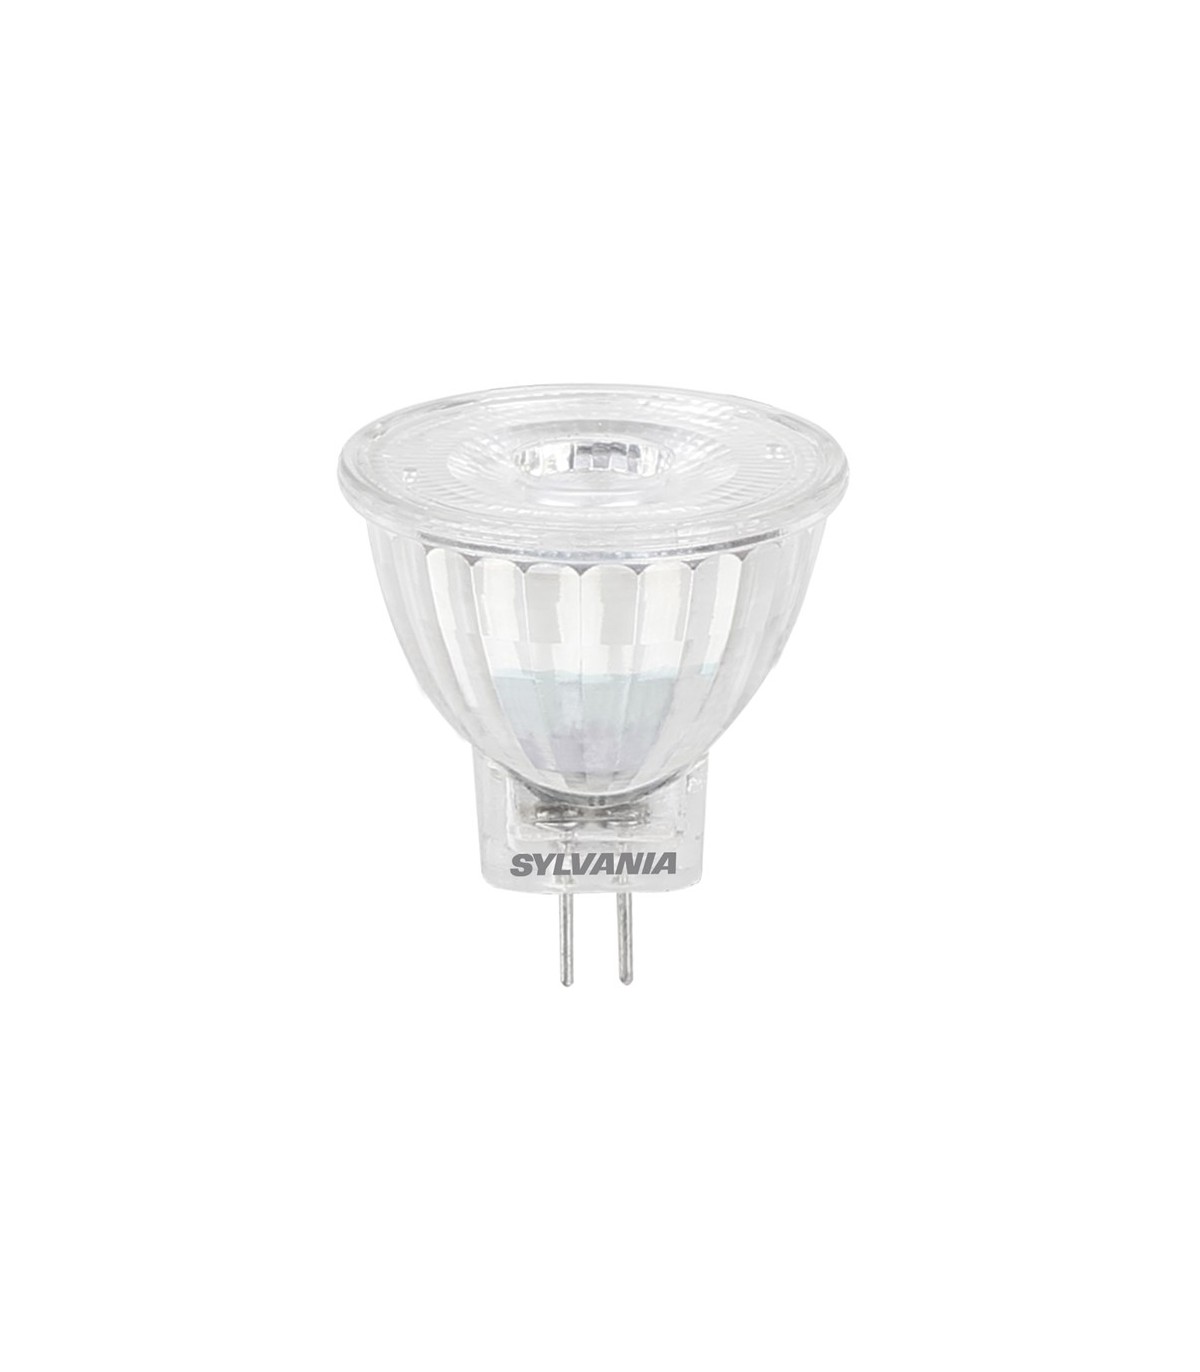 Ampoule LED Sylvania MR11 4W substitut 35W 345 lumens blanc froid